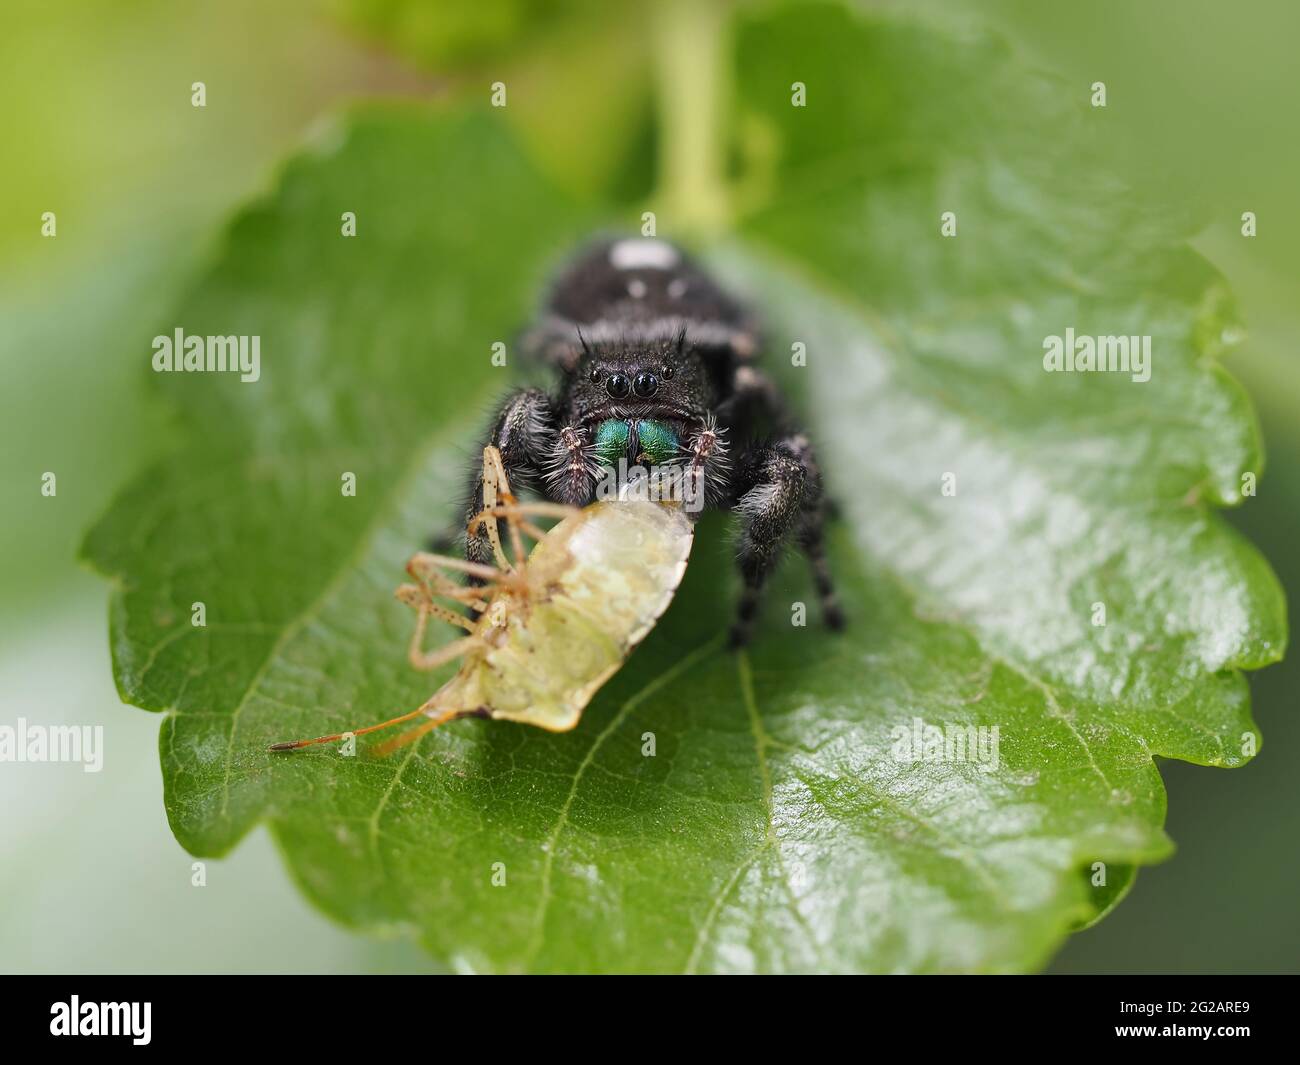 Phidippus audax (fett springende Spinne) mit Beute (Stinkbug) - Makrofotografie Stockfoto